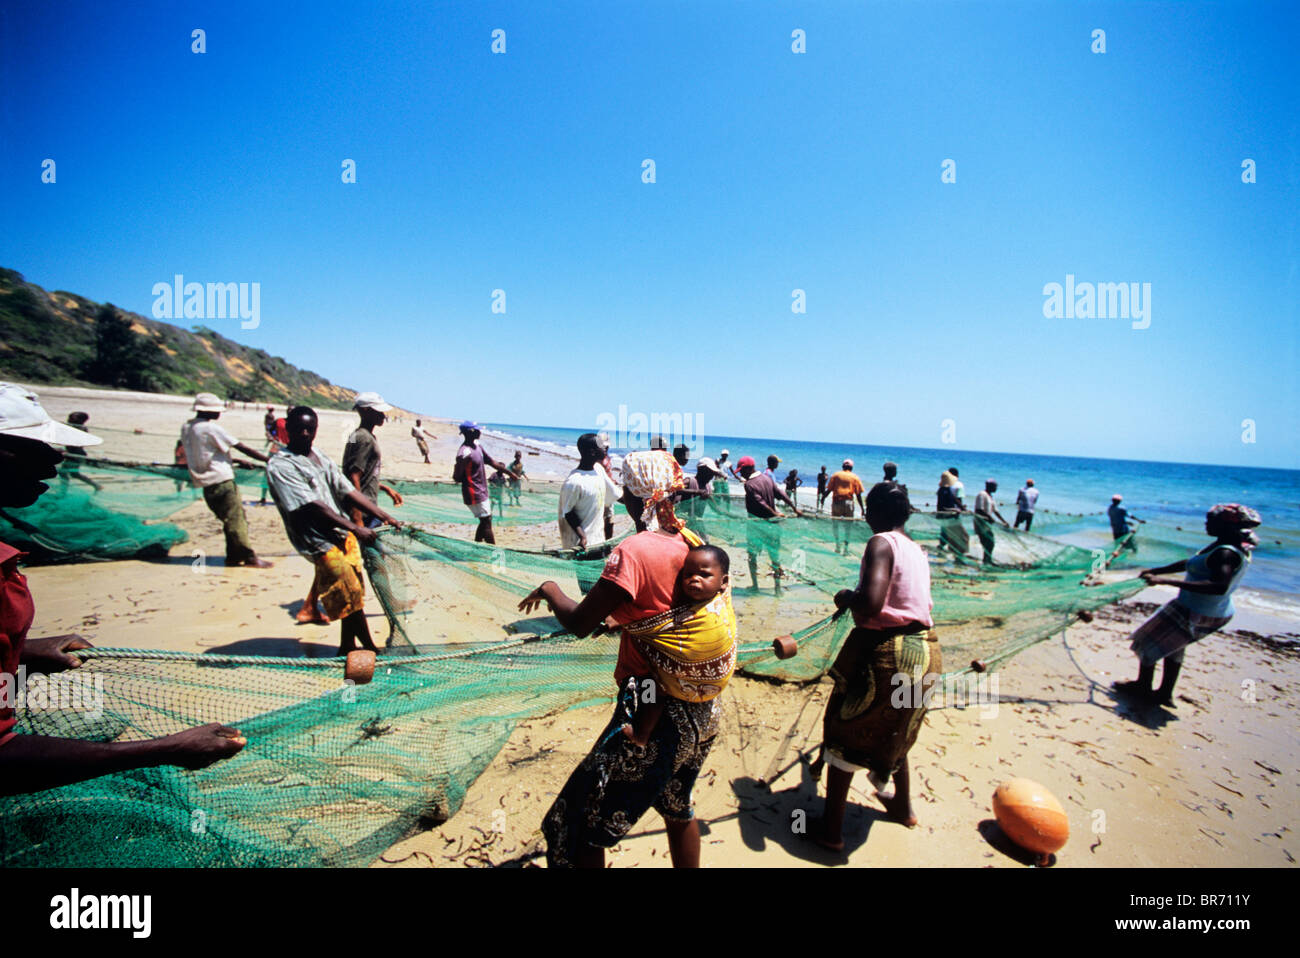 Fishermen pulling in beach seine net in the early morning